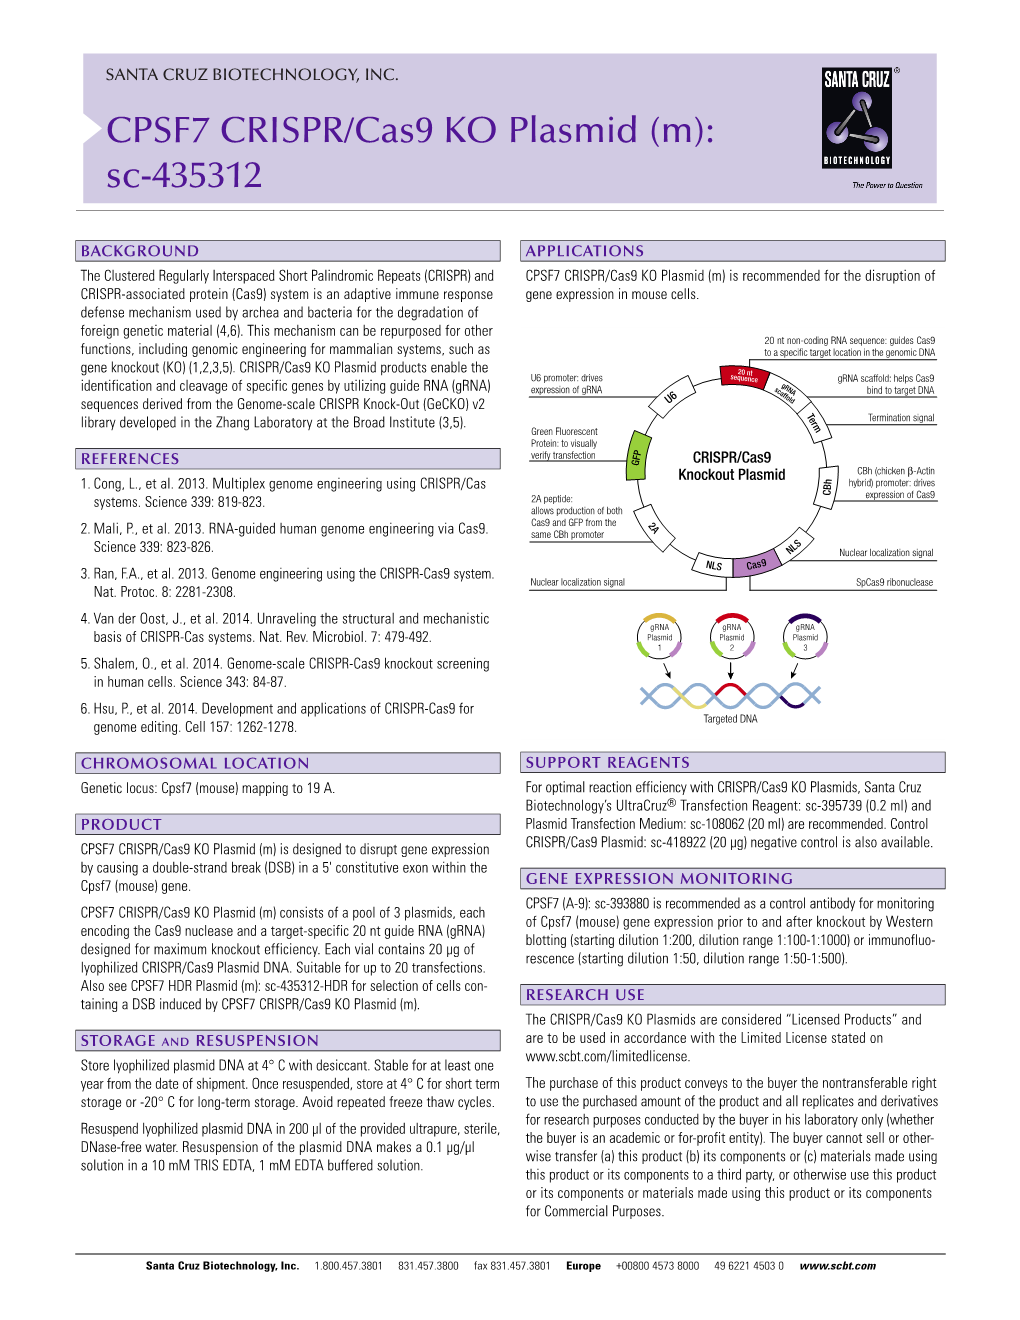 CPSF7 CRISPR/Cas9 KO Plasmid (M): Sc-435312